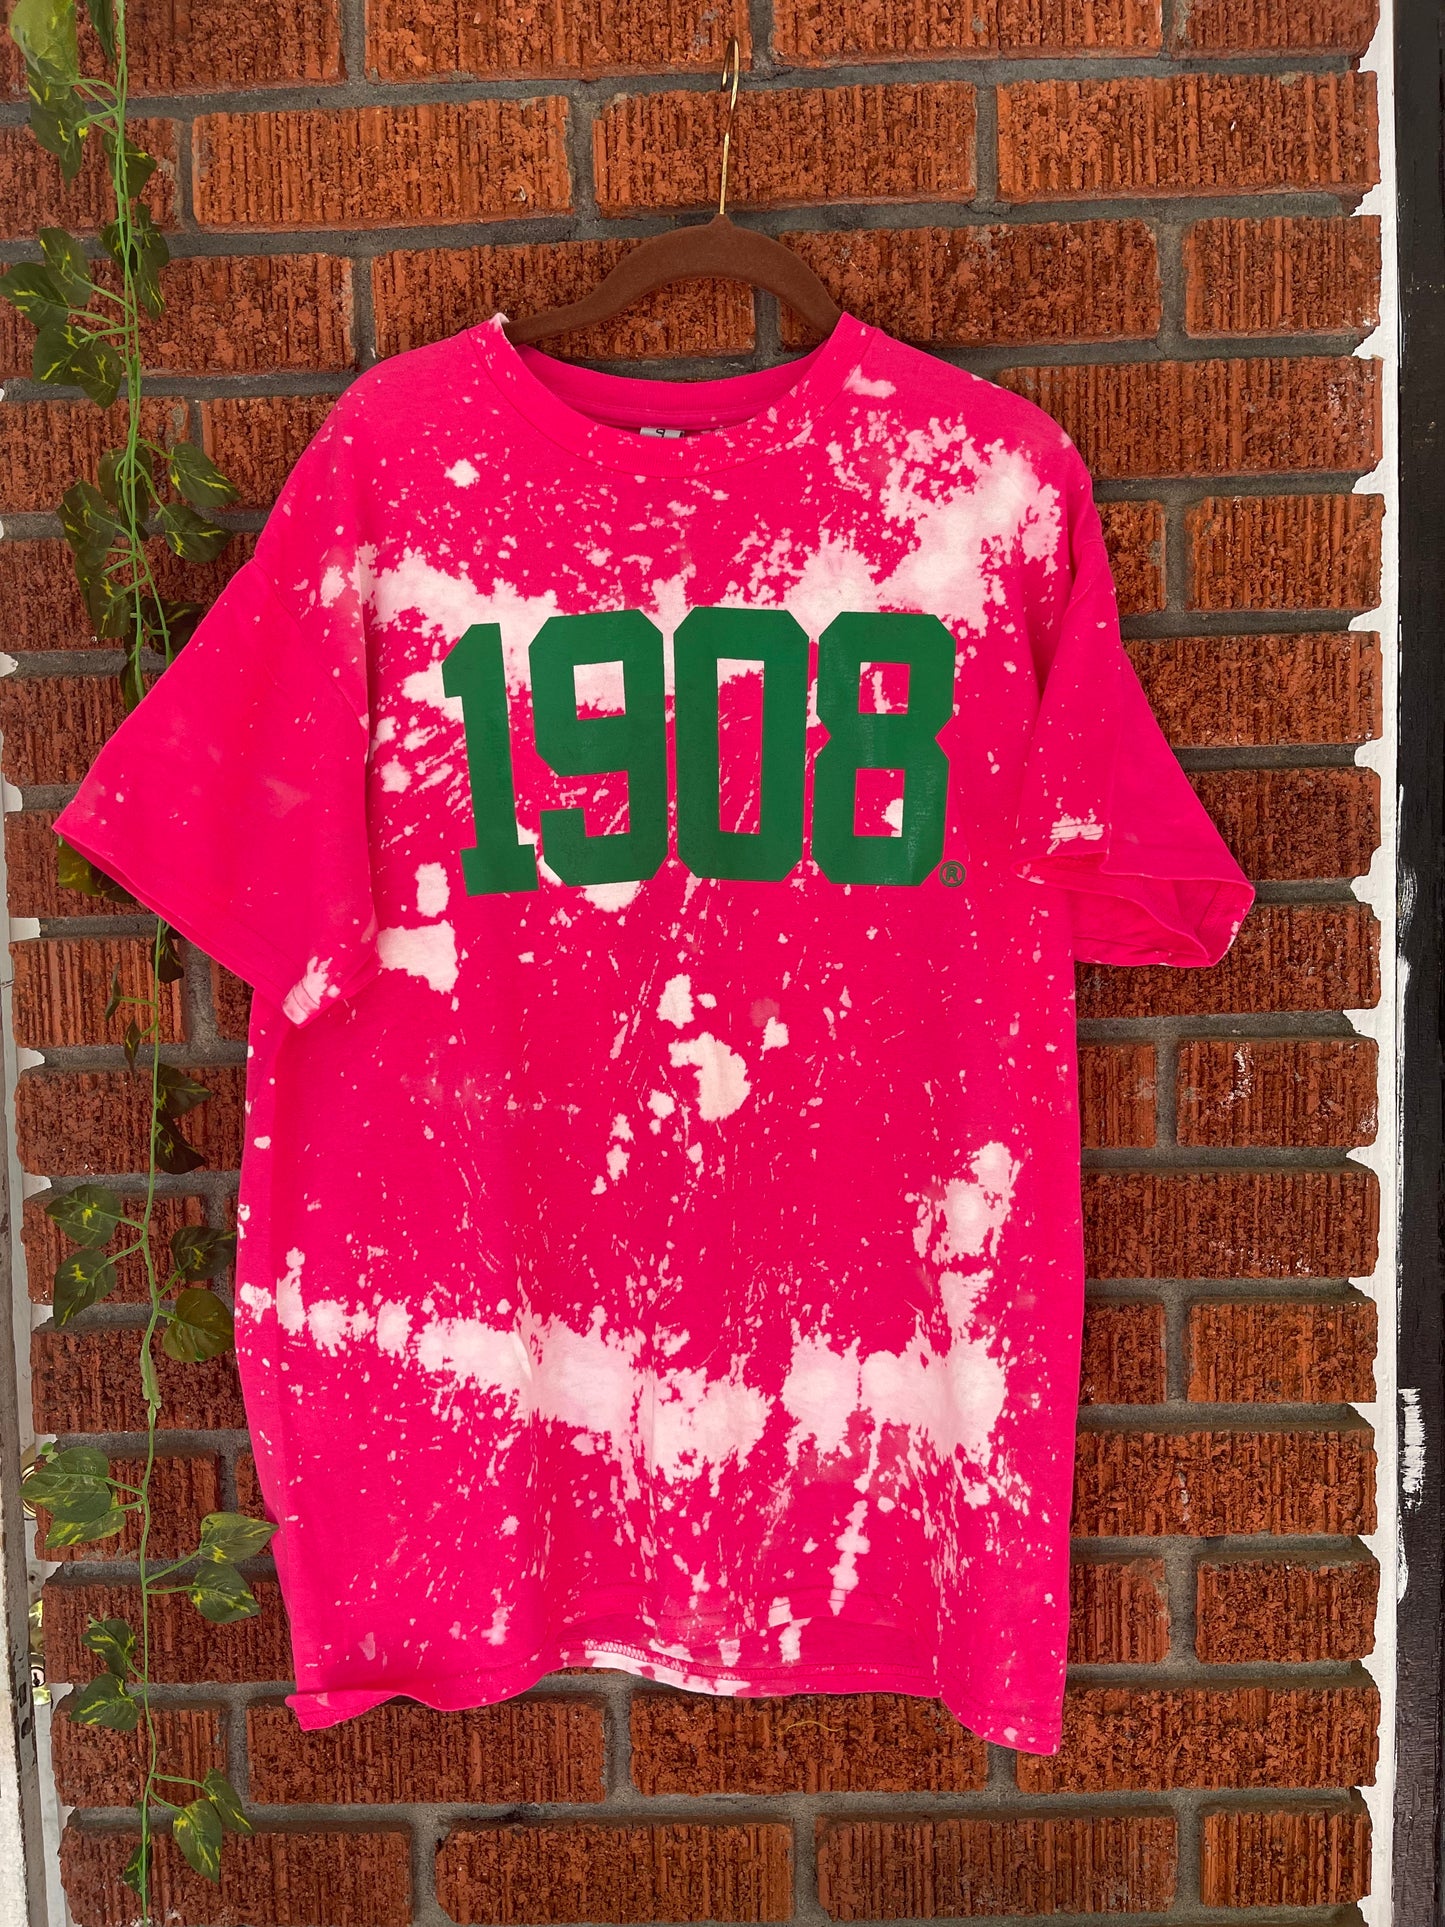 The Pink 1908 Classic Tee - ccldesignsusa - AKA Alpha Kappa Alpha Pink and Green handmade hand bleach tie dye